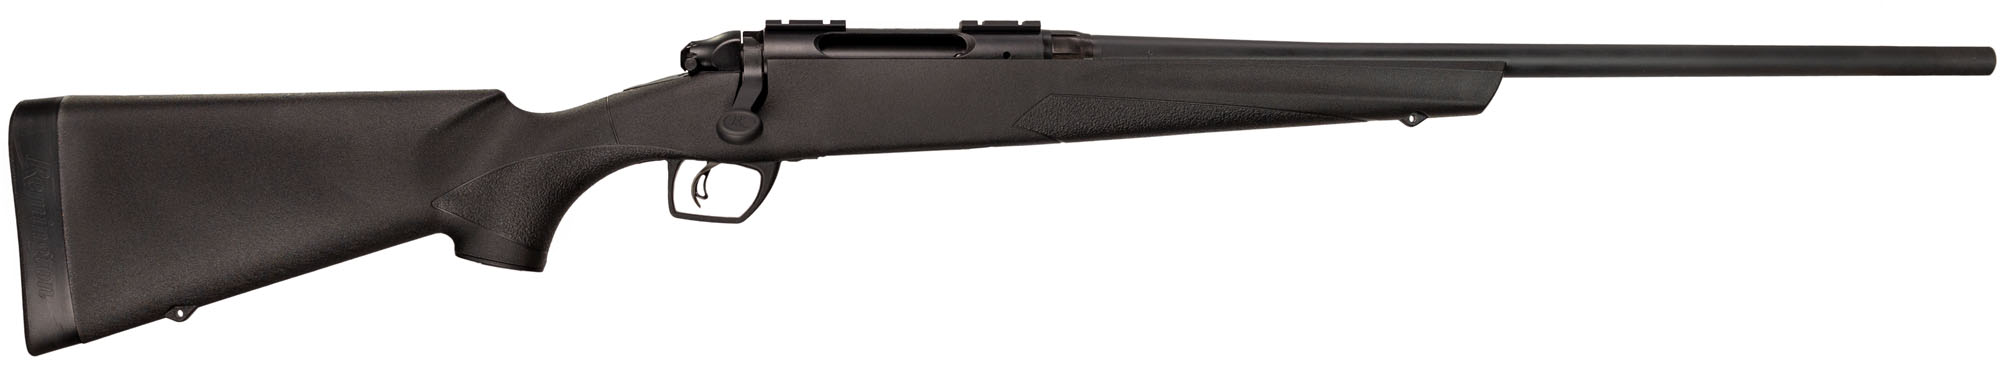 Rifle de cerrojo REMINGTON 783 - 300 Win. Mag.